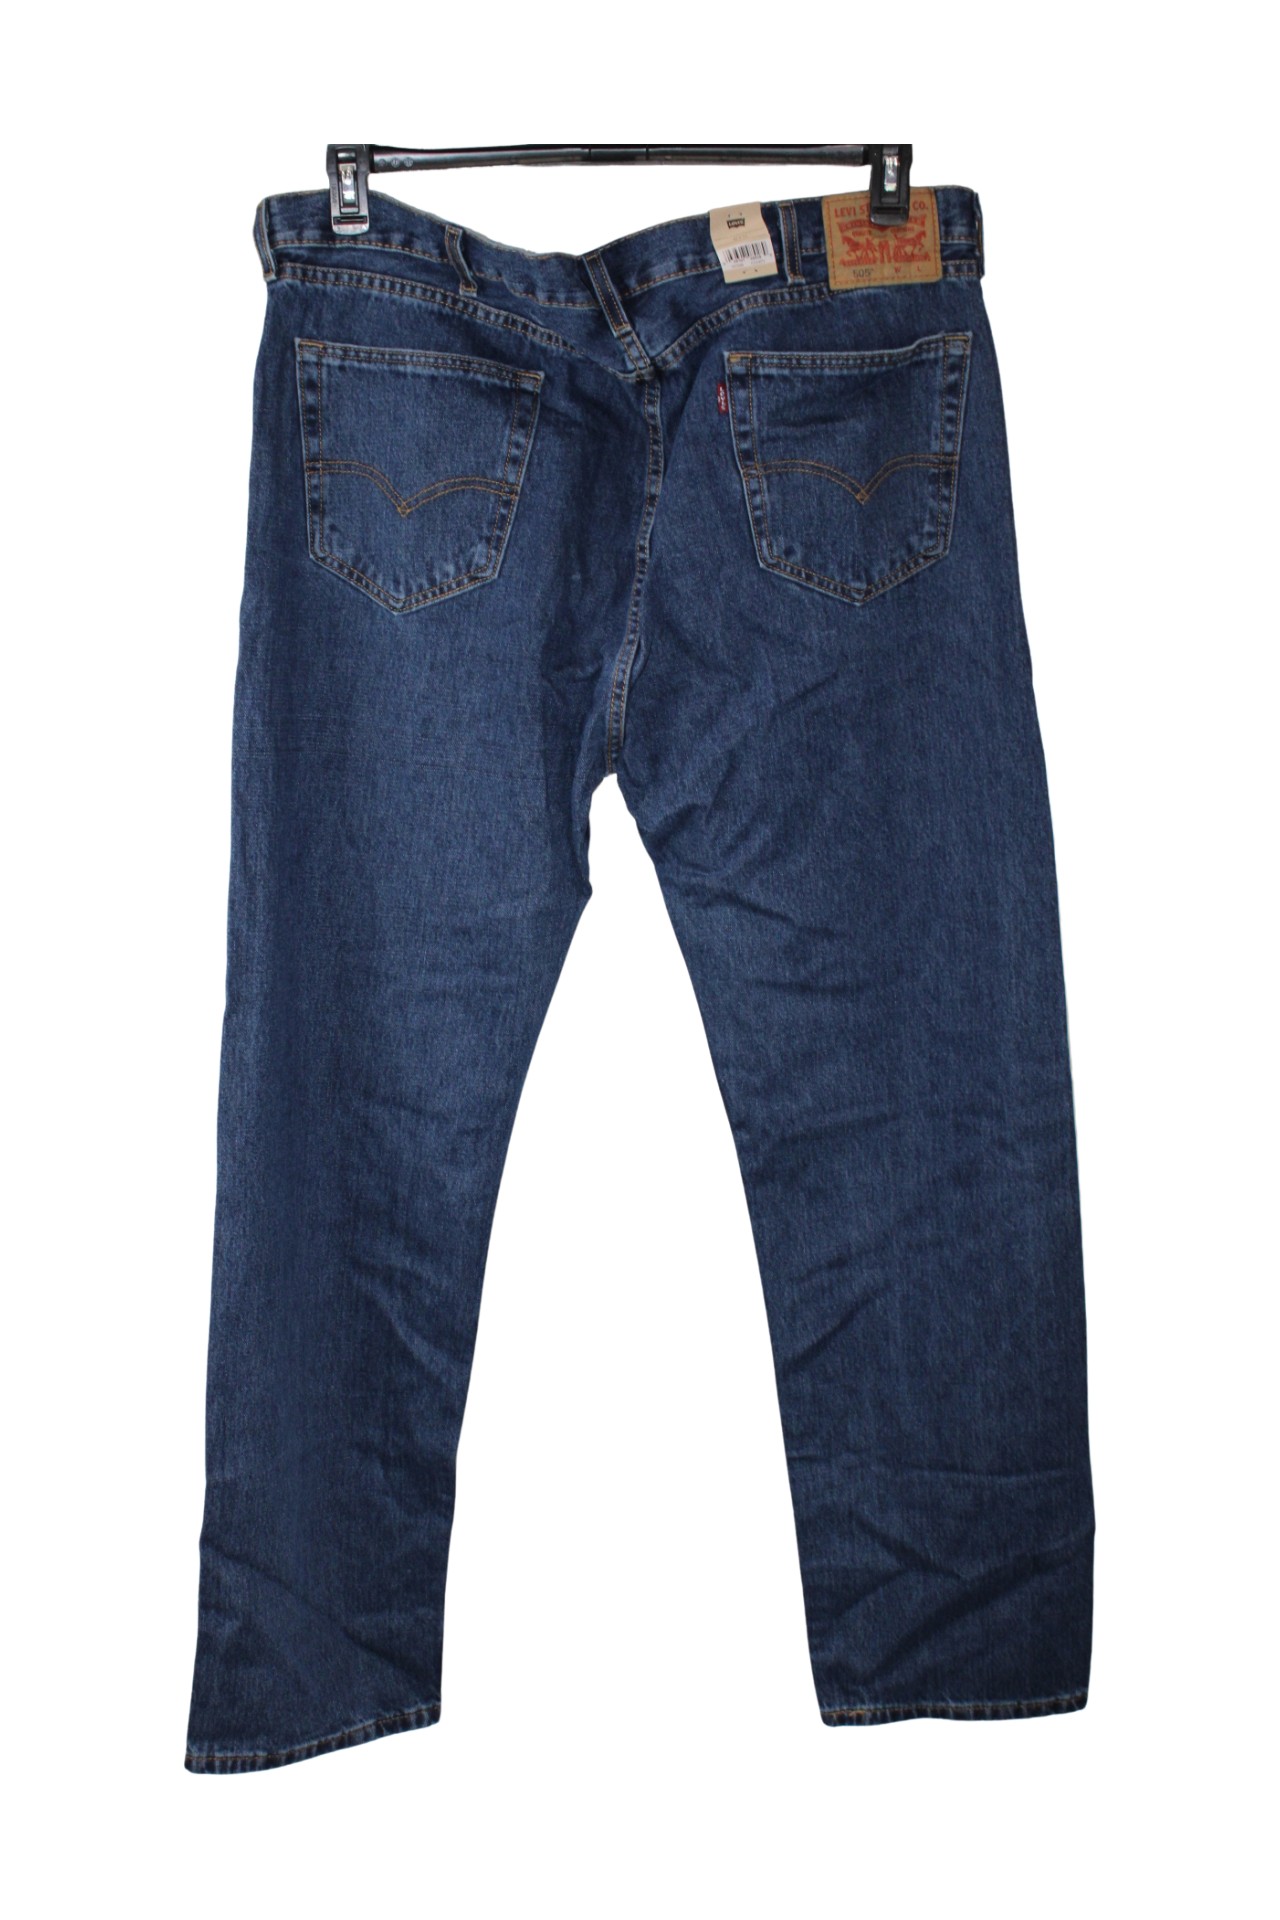 Levi's Men's 505 Regular Fit Jeans | eBay